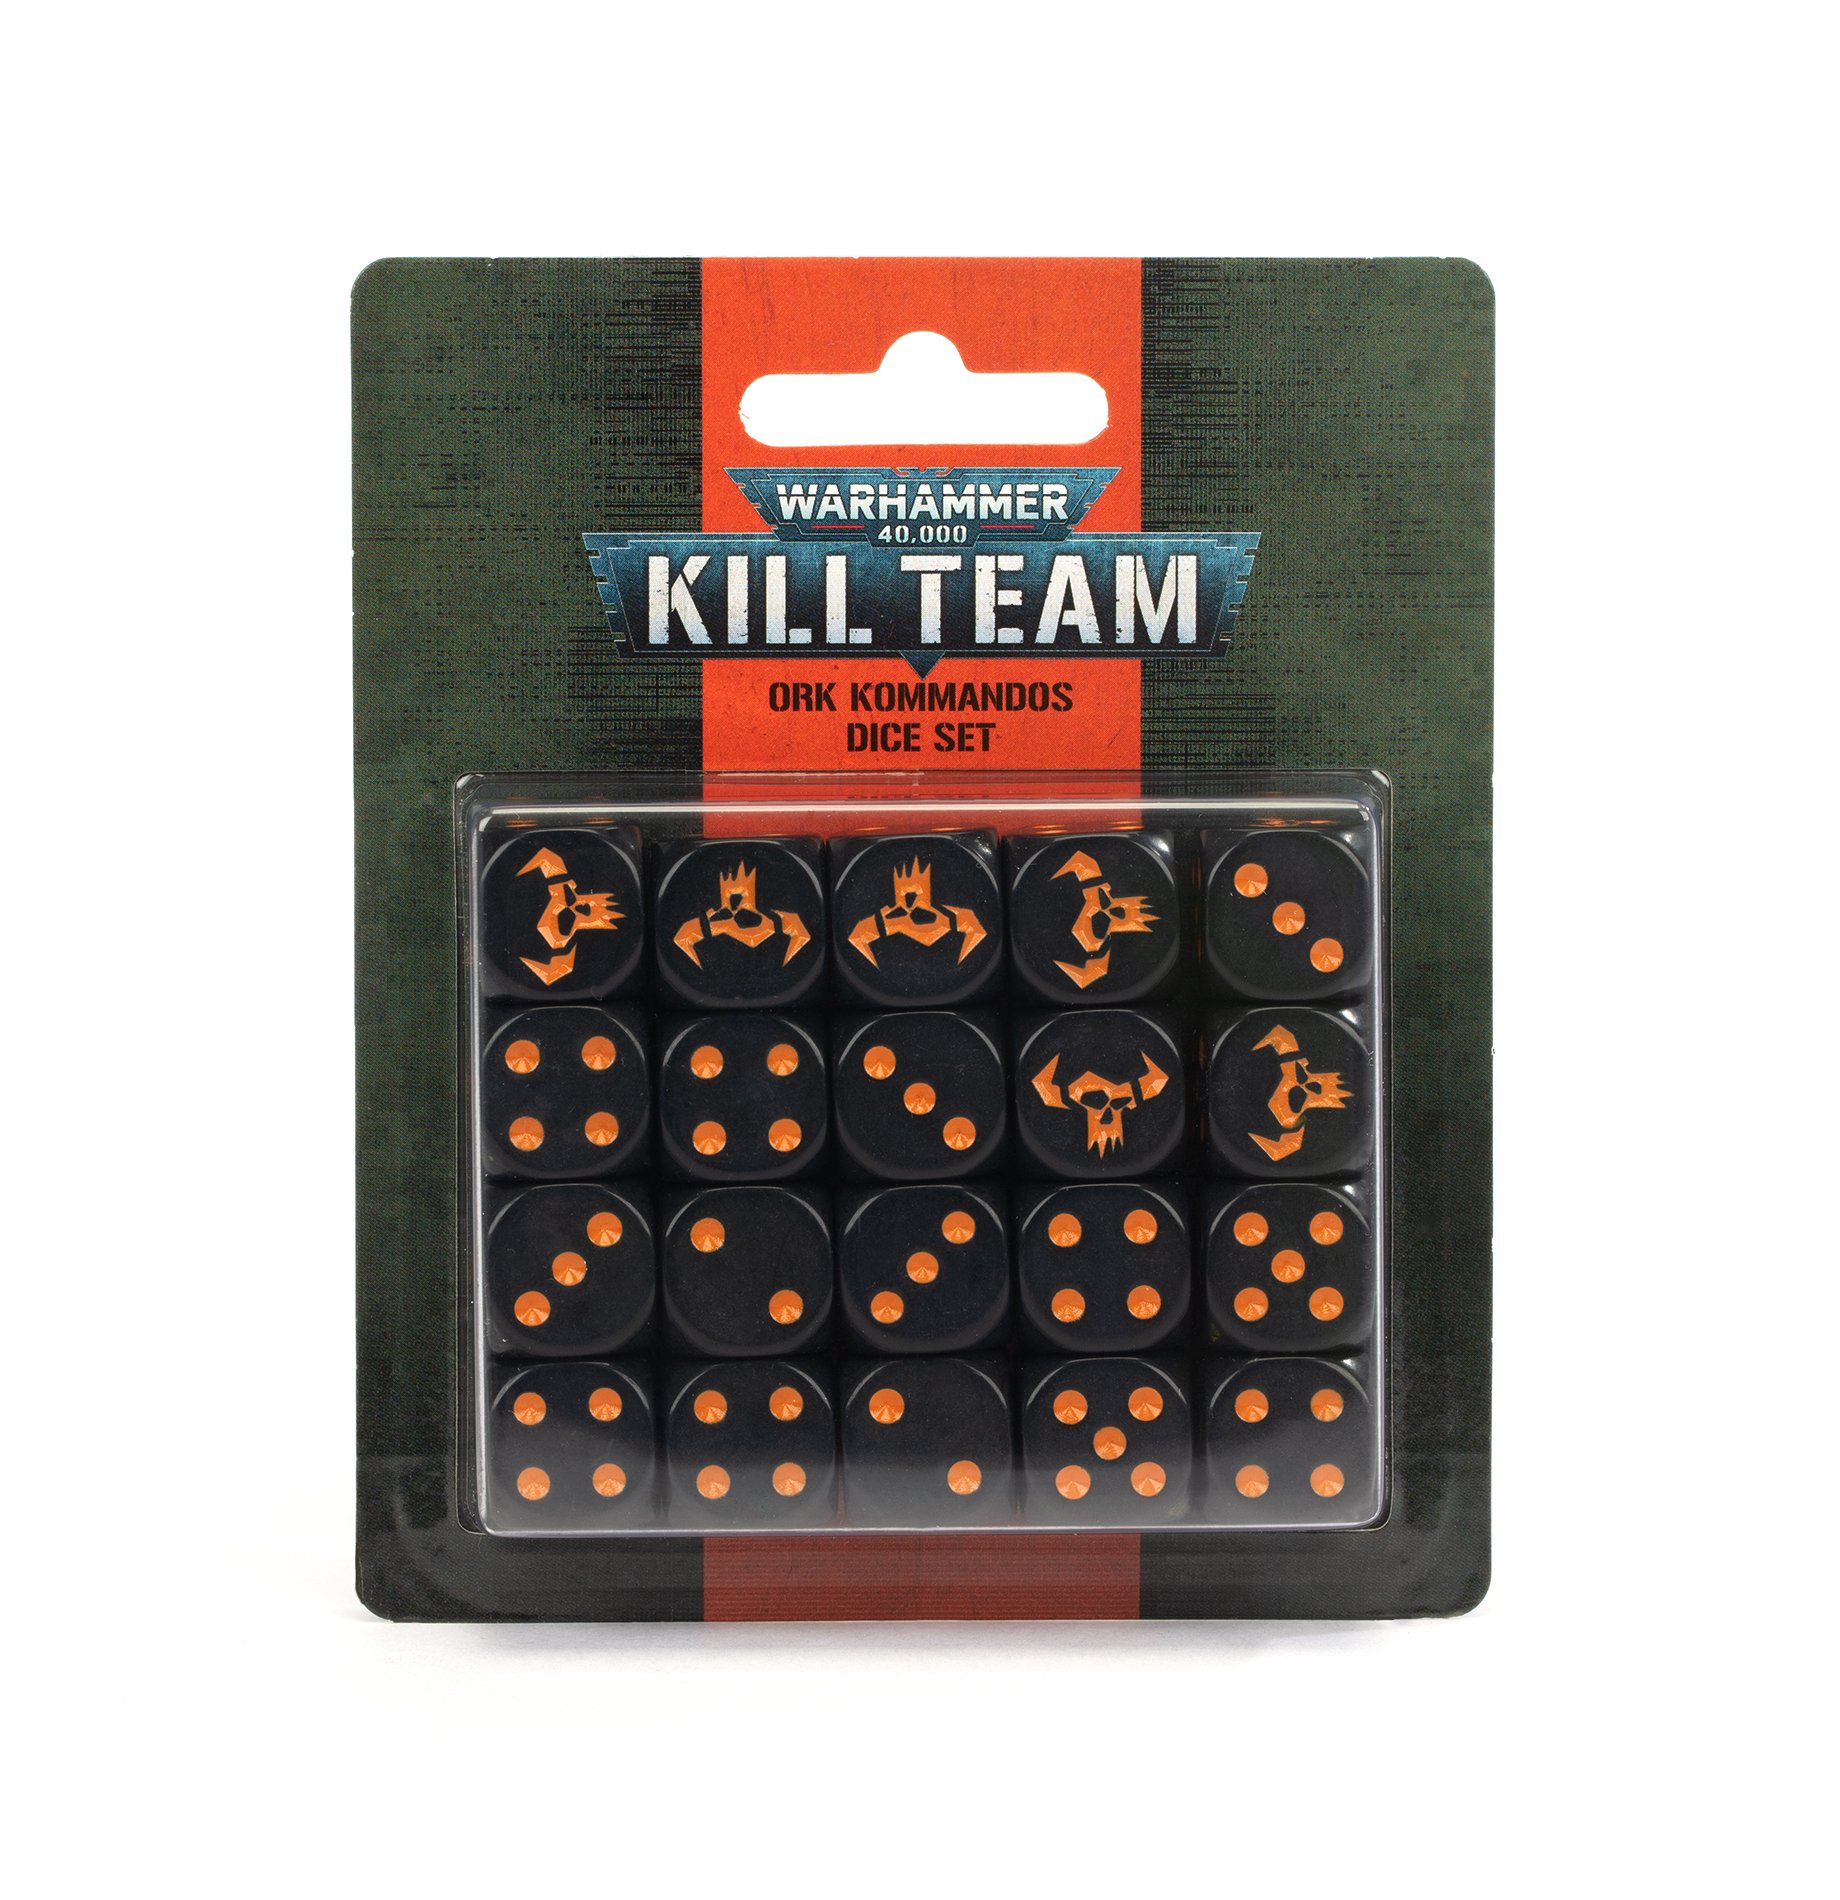 Kill Team: Ork Kommands Dice Set